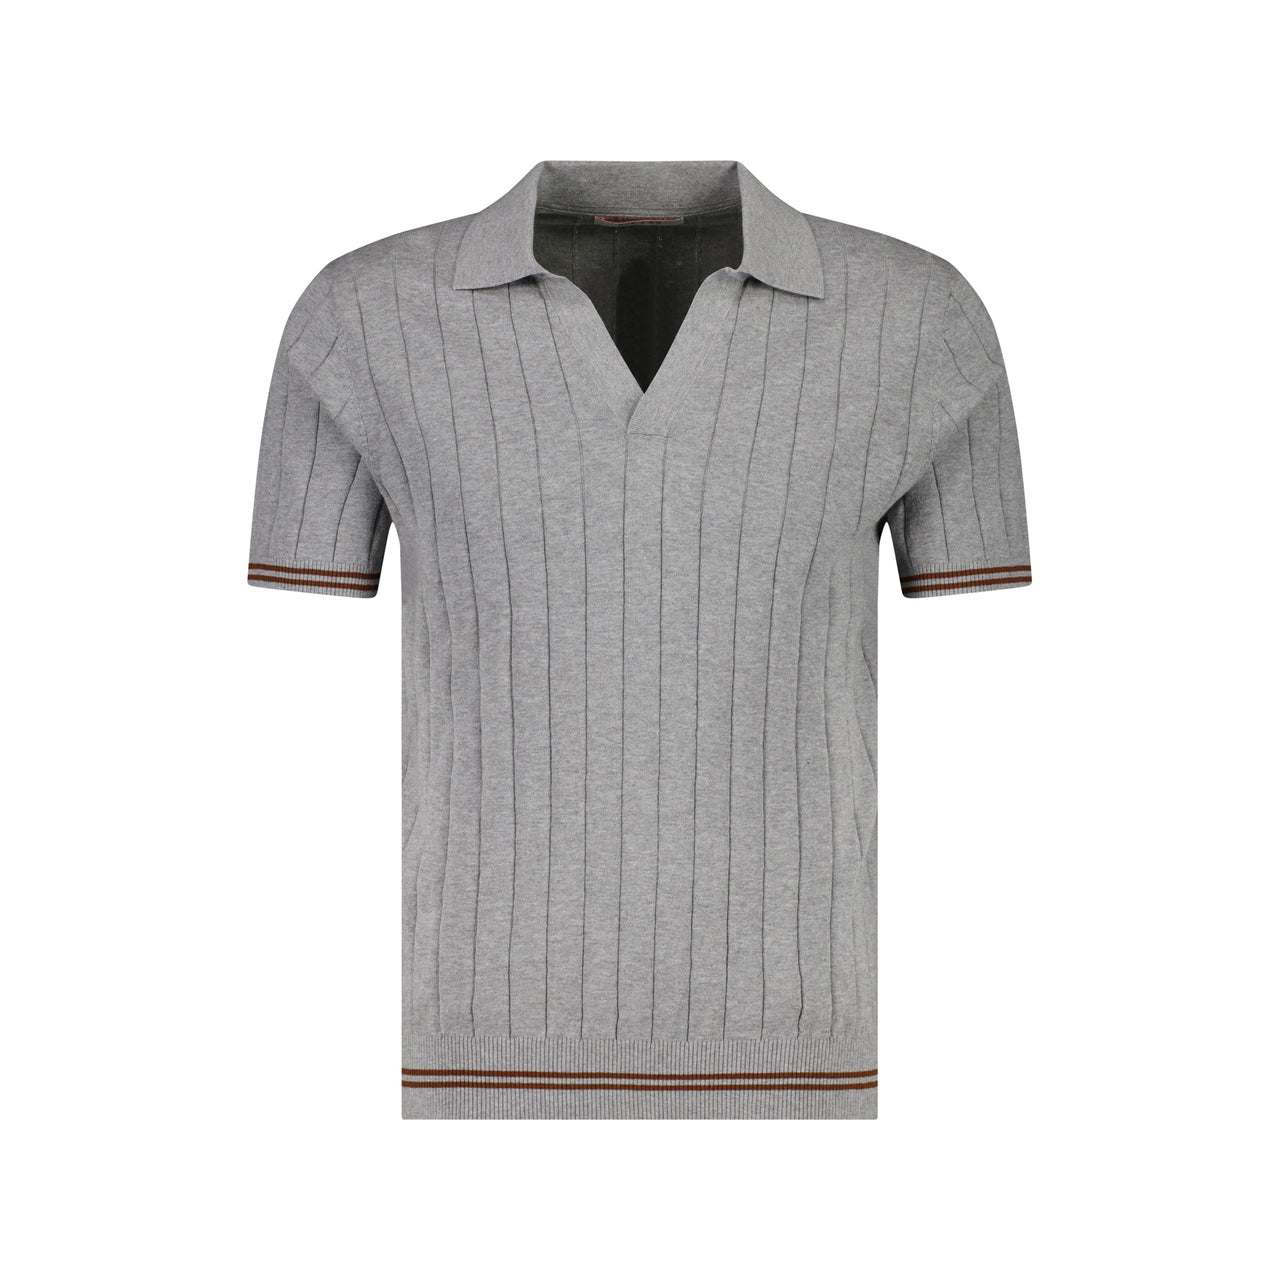 MCKINNON Skipper Neck Short Sleeve Shirt GREY/BROWN